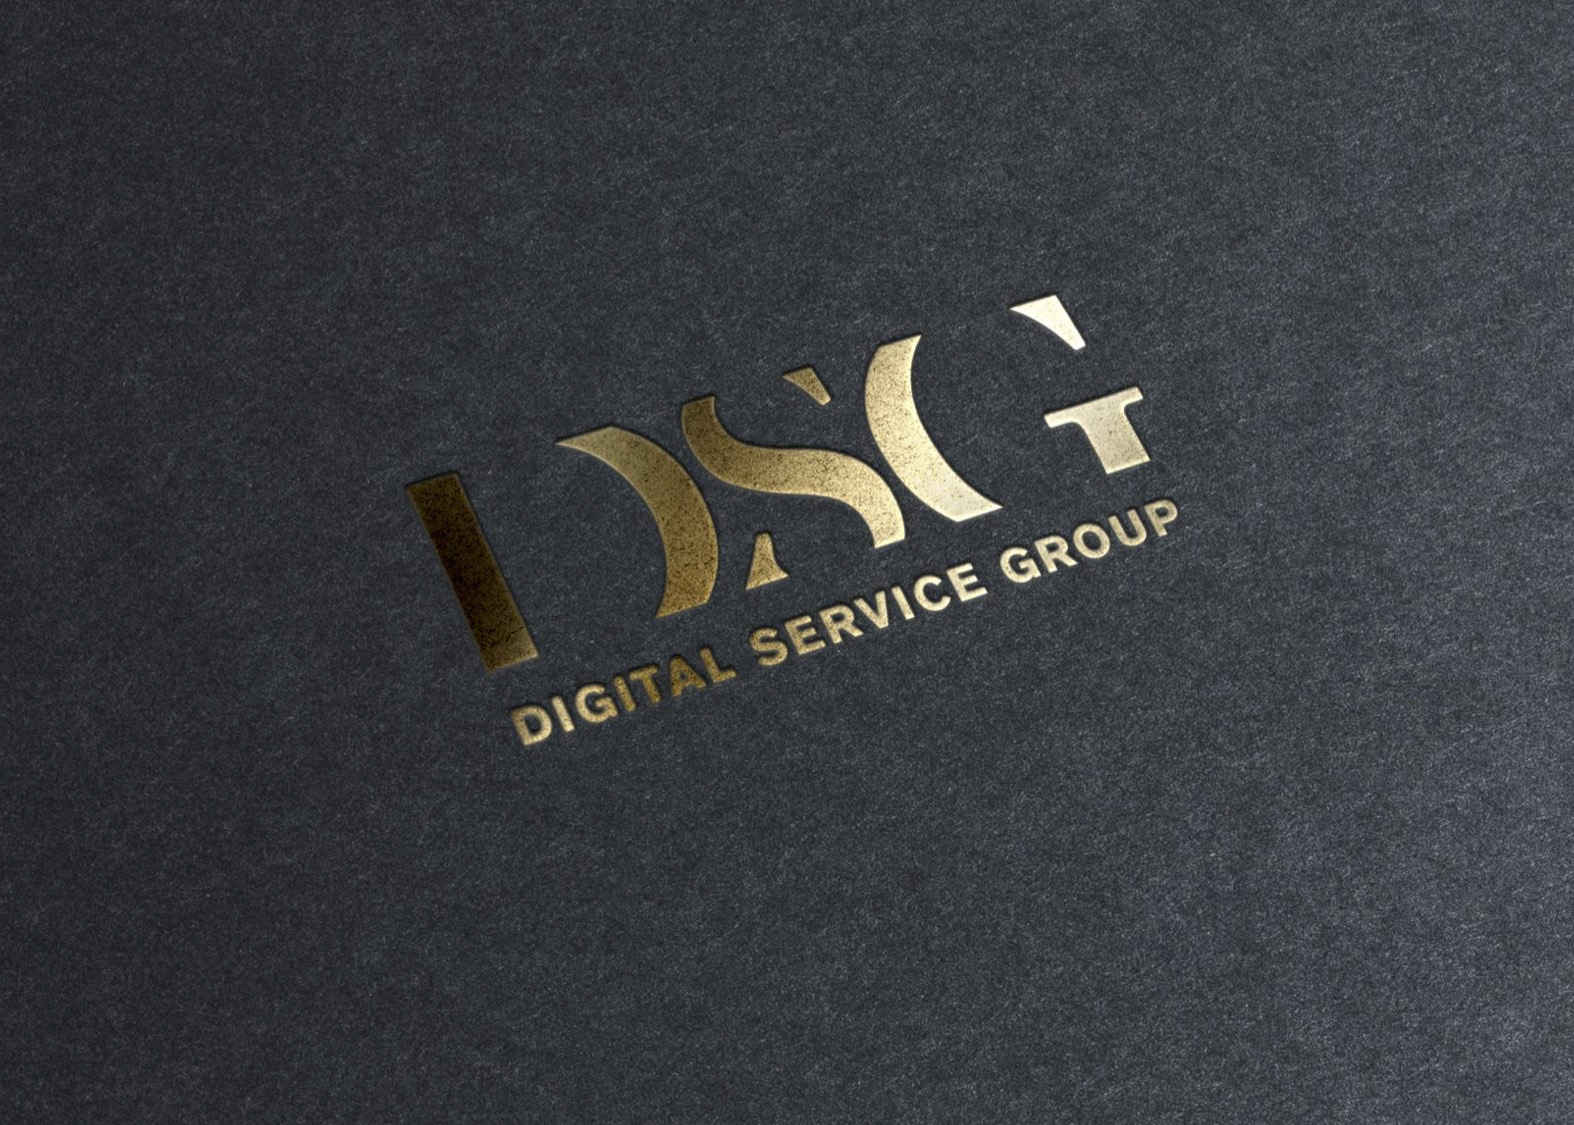 Digital Service Group 75